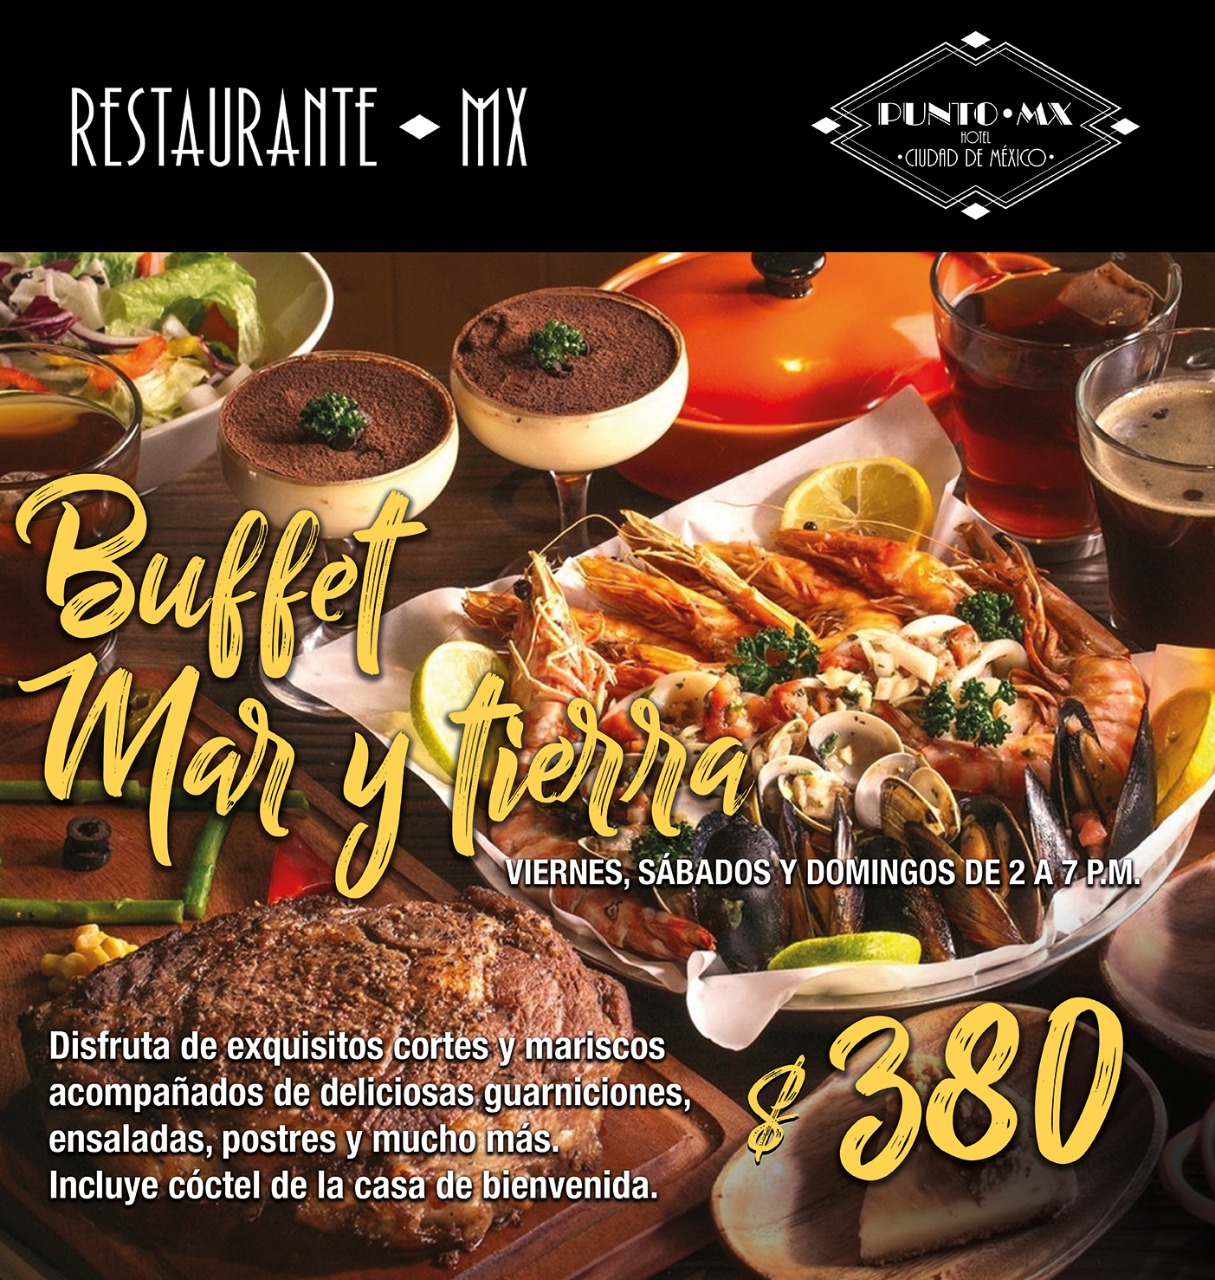 Restaurante MX - Hoteles PUNTO MX